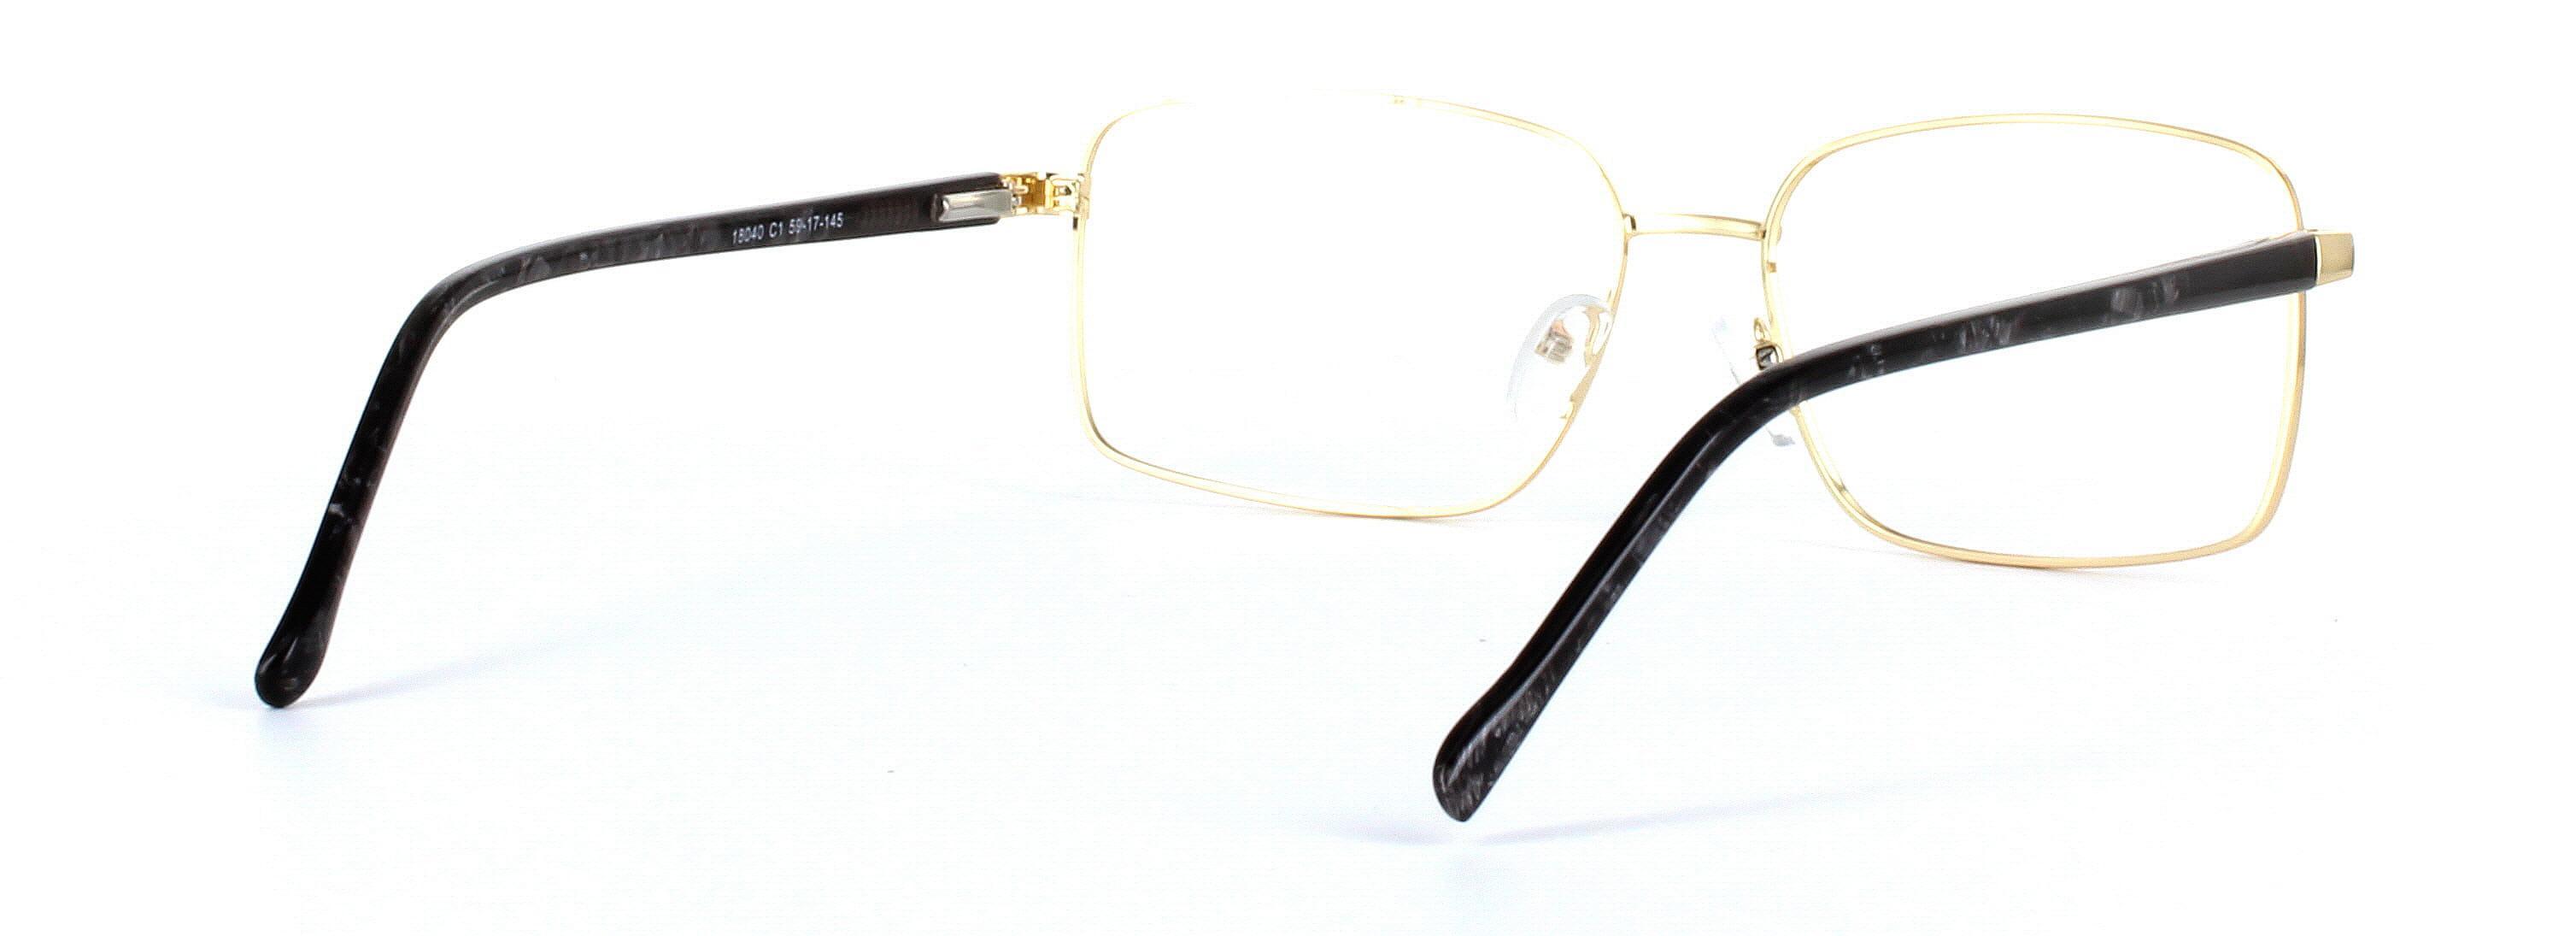 Marlborough Gold Full Rim Rectangular Glasses - Image View 4